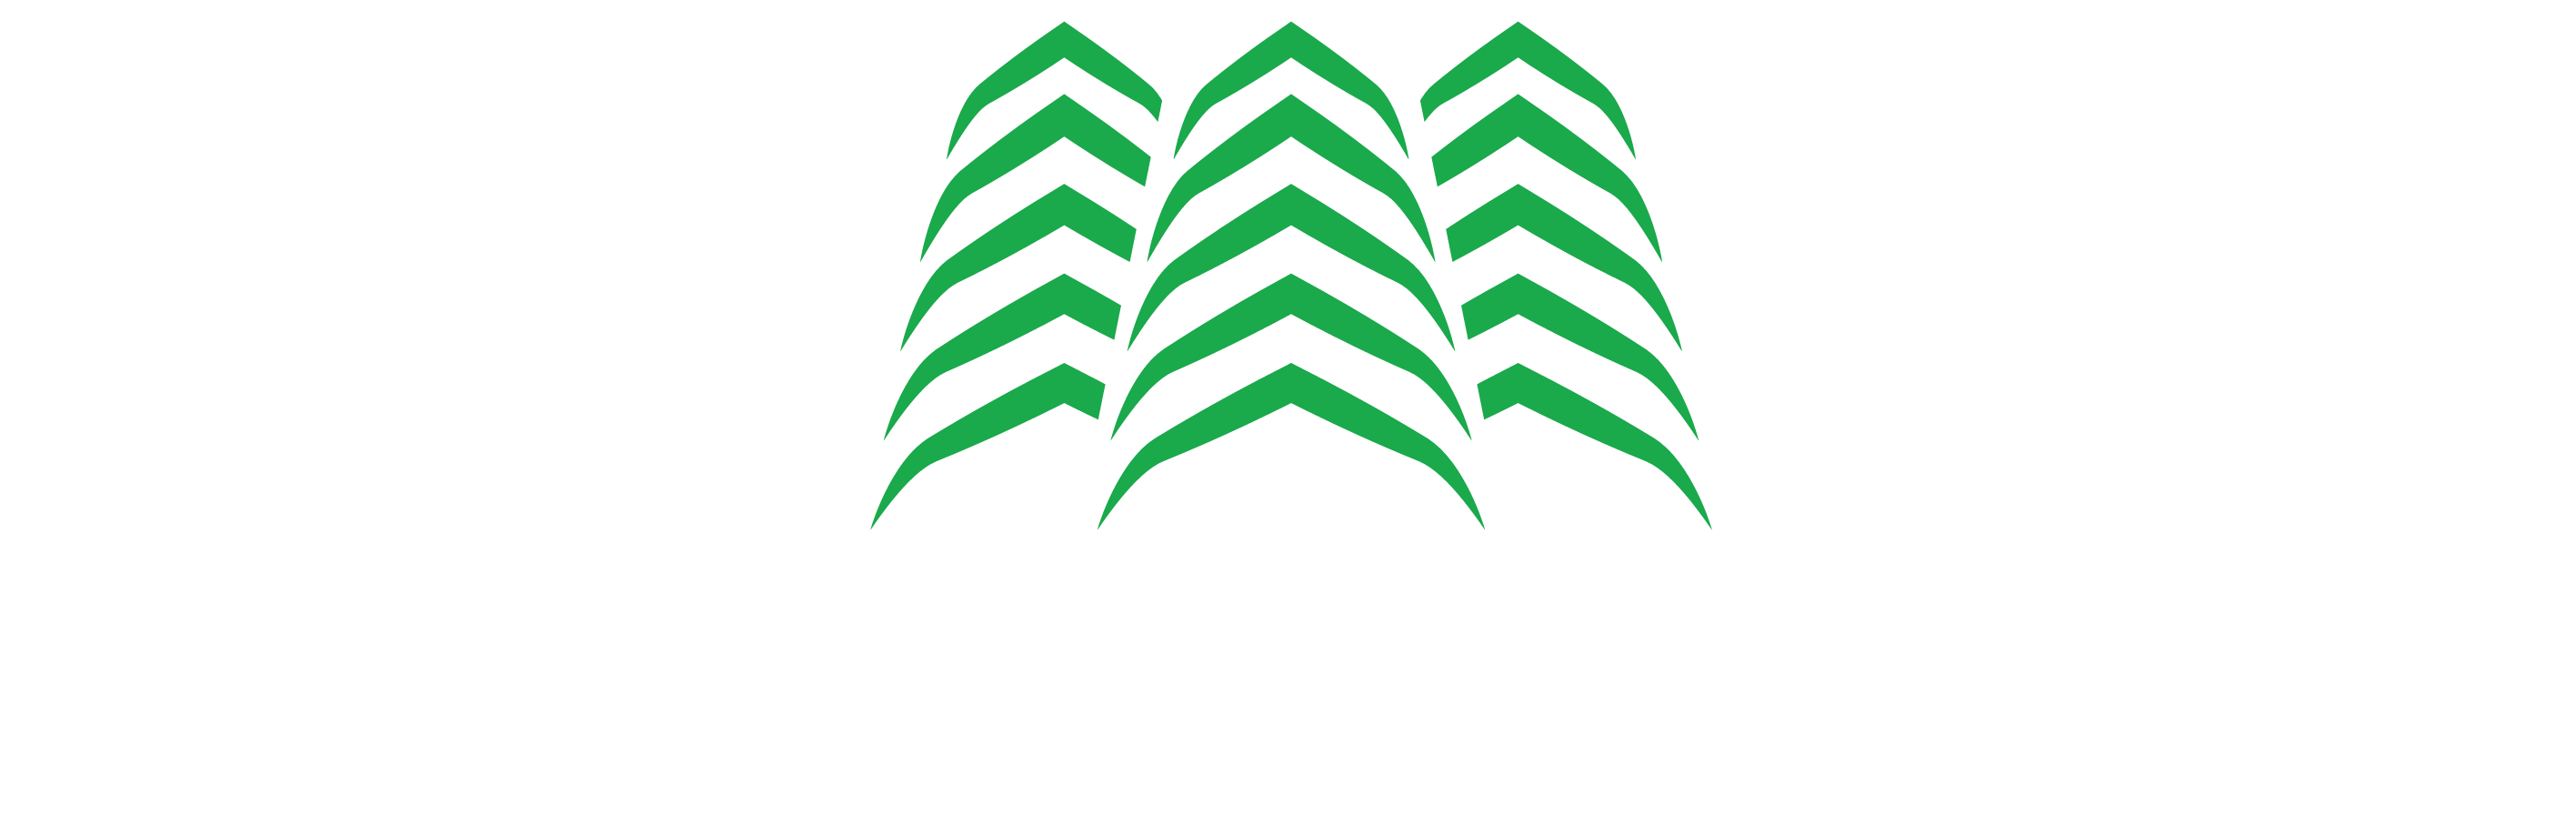 Jade Art Group